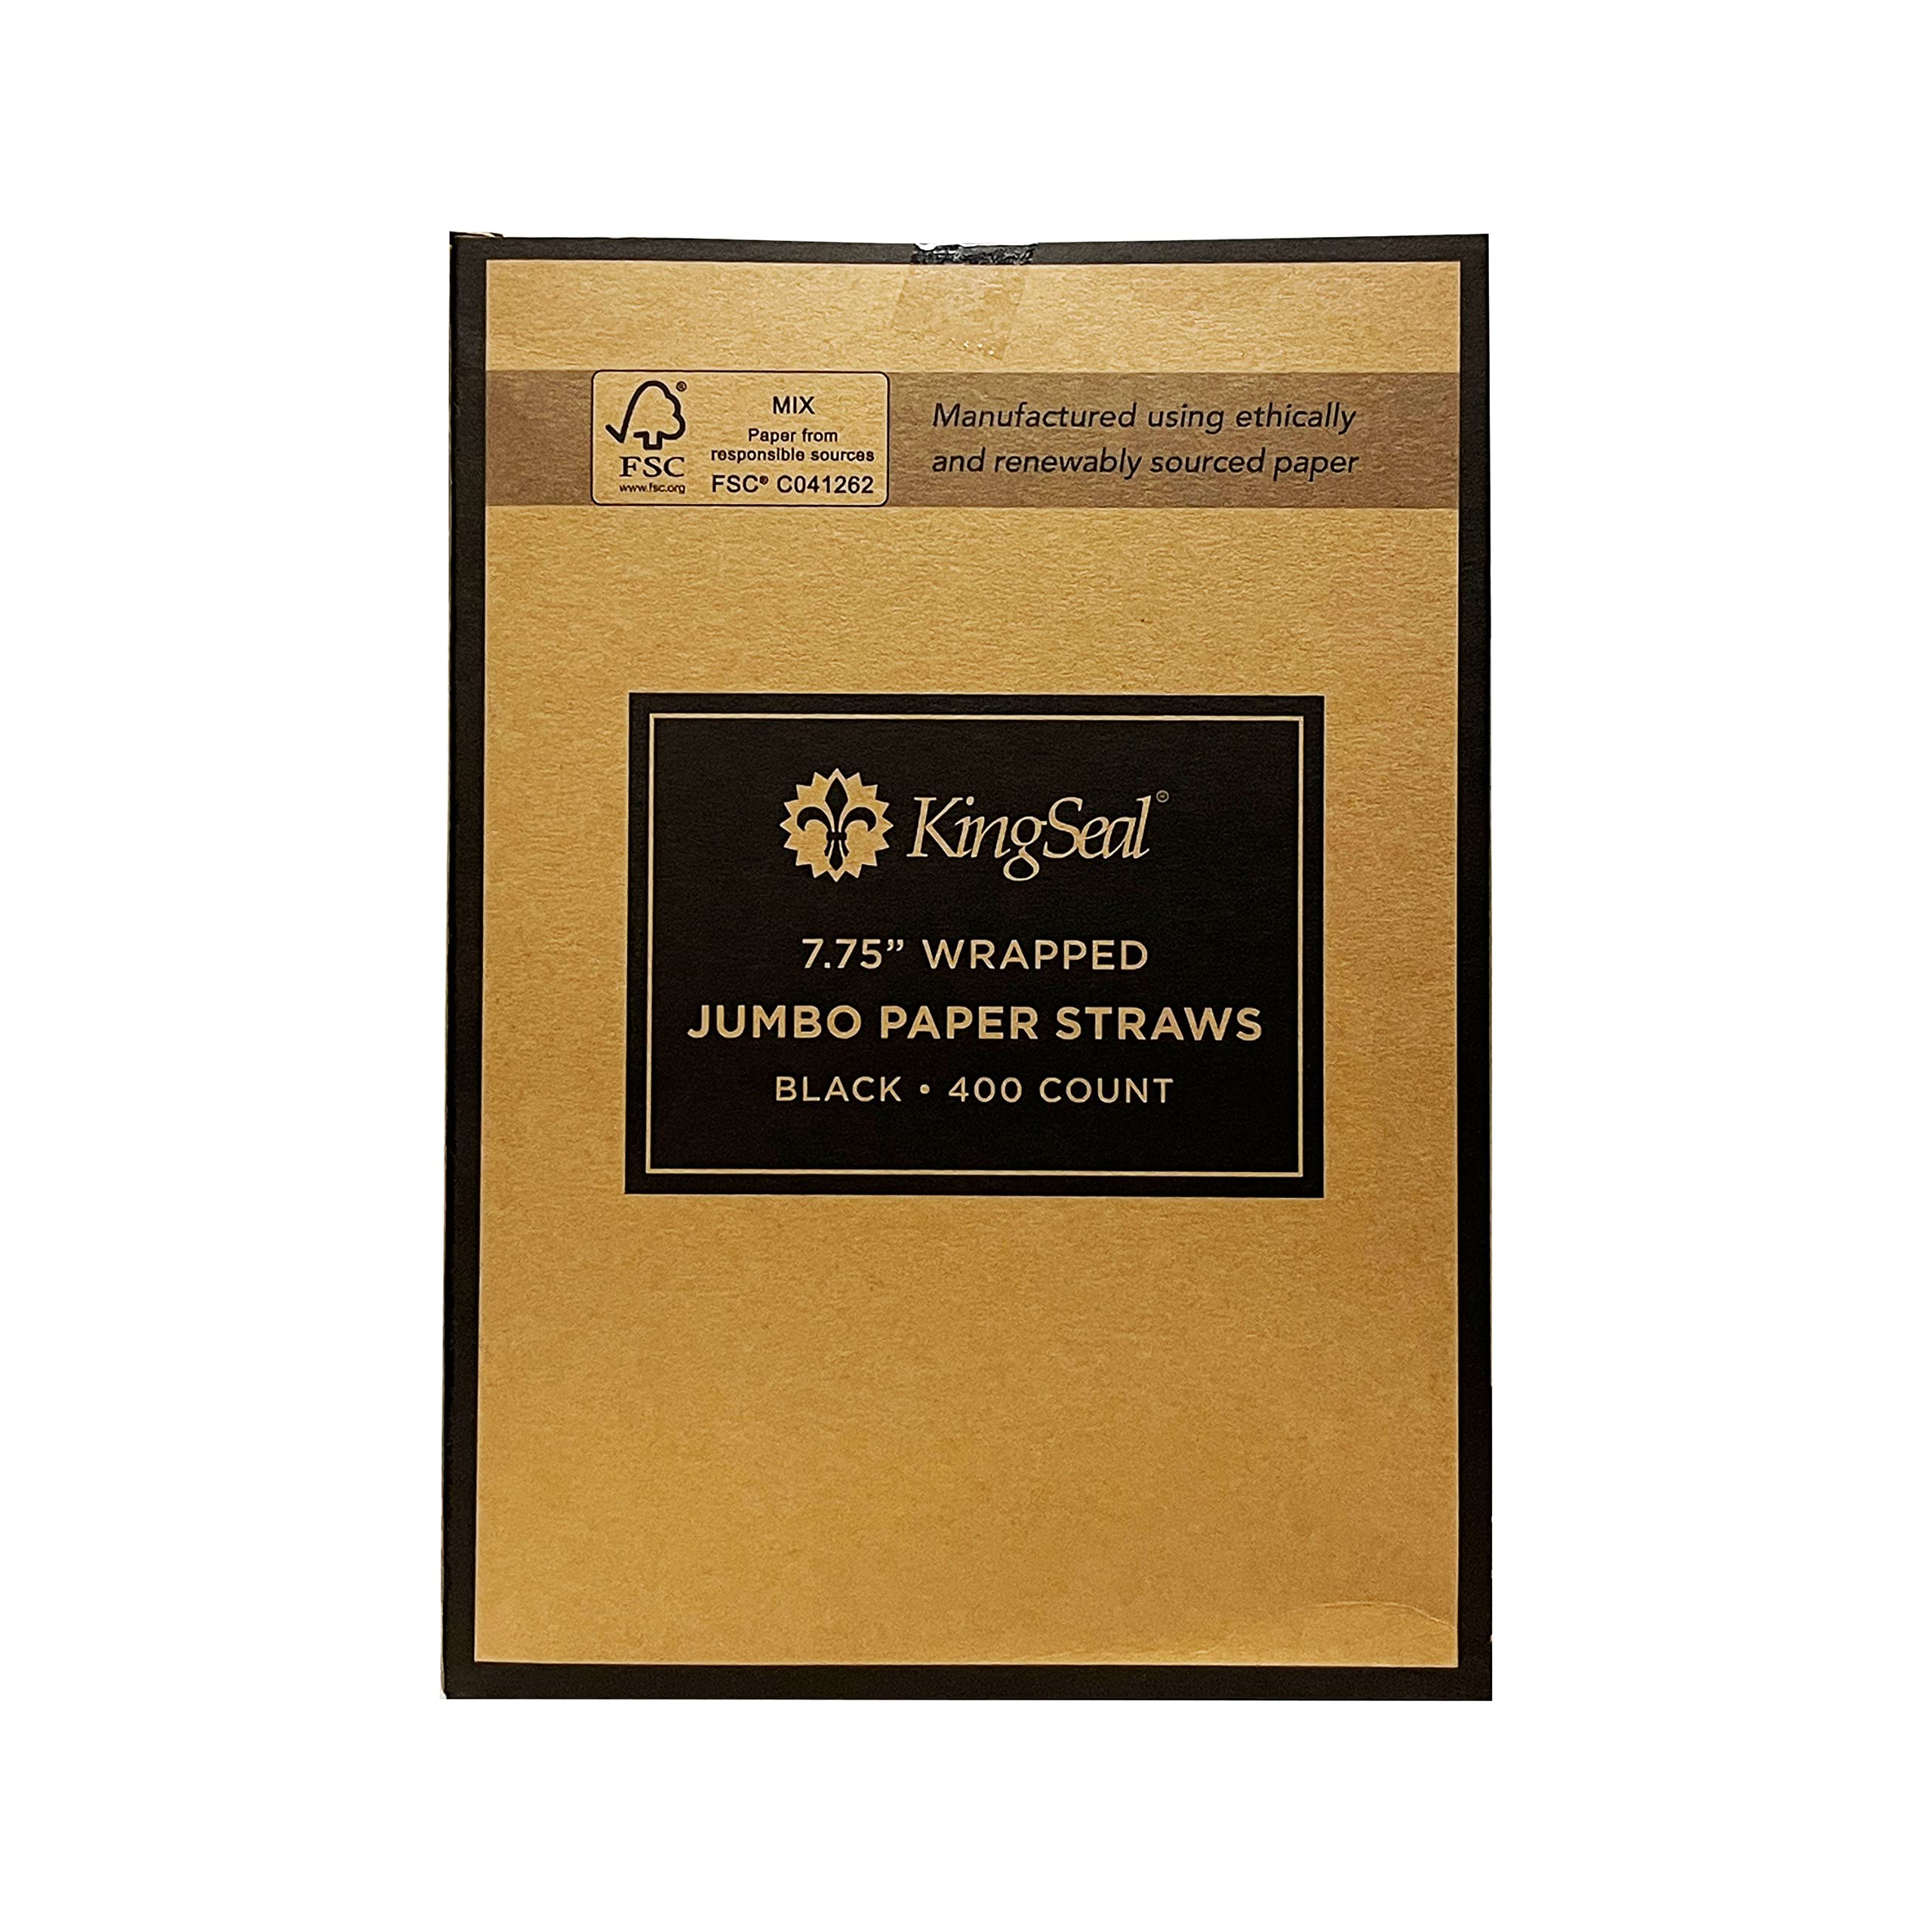 Kingseal "Jumbo" Paper Drinking Straws, FSC Certified, Paper Wrapped, 7.75" Length x 6mm Diameter, BLACK, Biodegradable, Earth Friendly, Bulk Pack - 400 Straws per Box